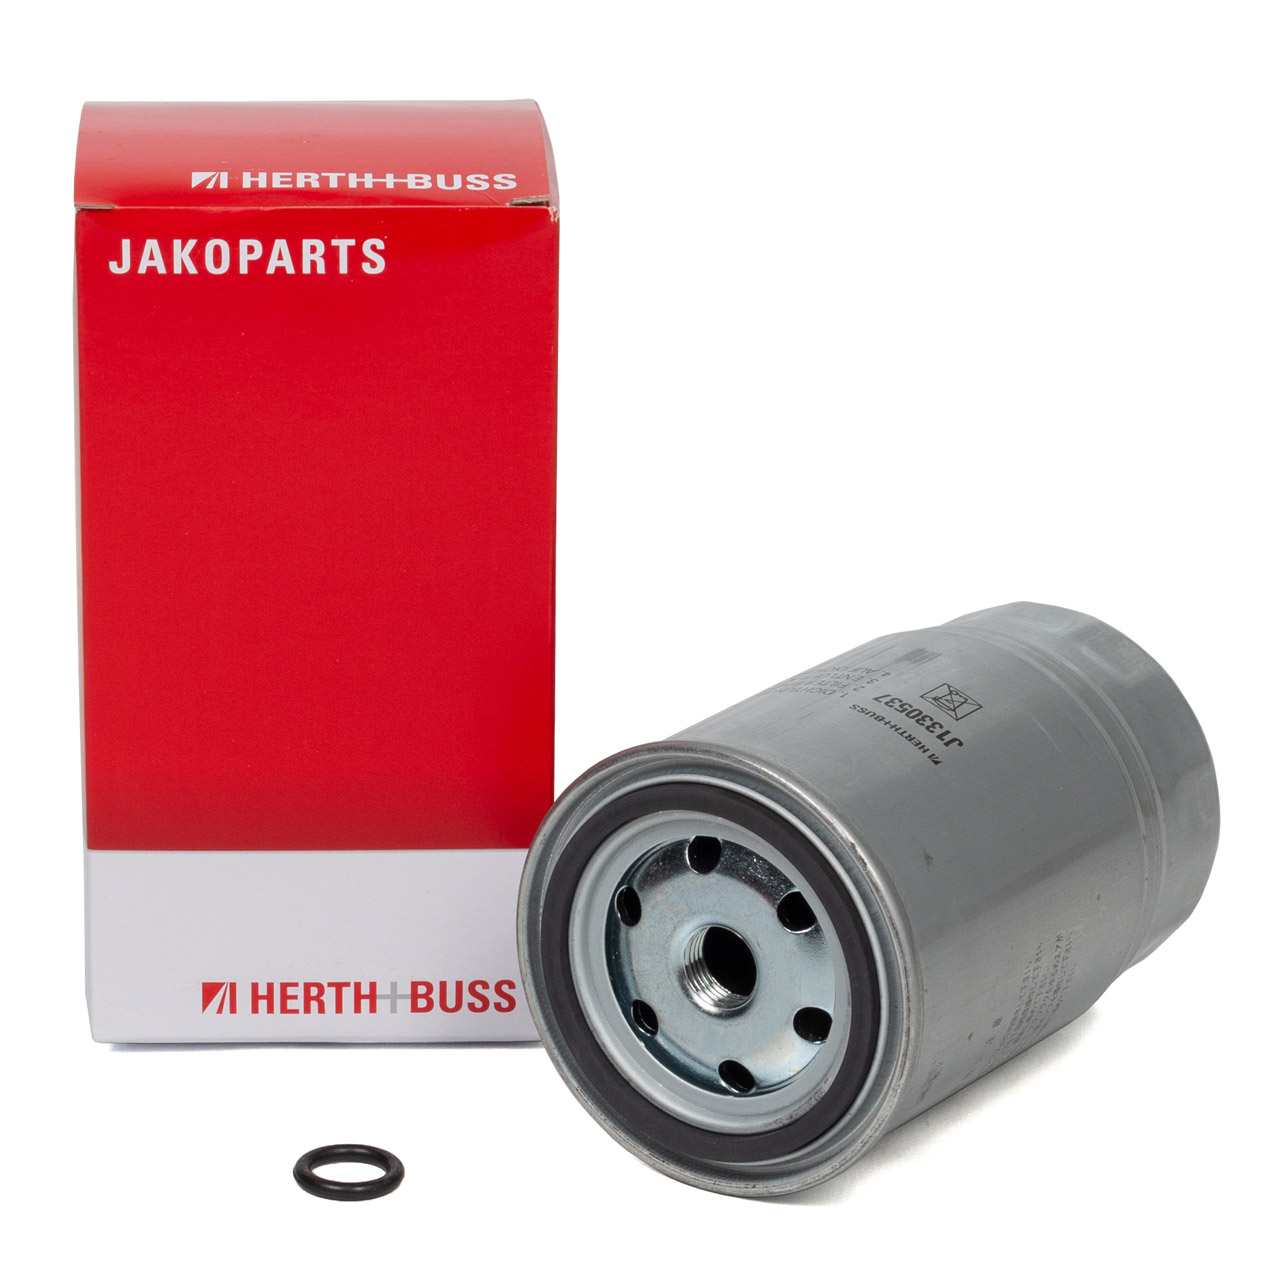 HERTH+BUSS JAKOPARTS Kraftstofffilter - J1330537 